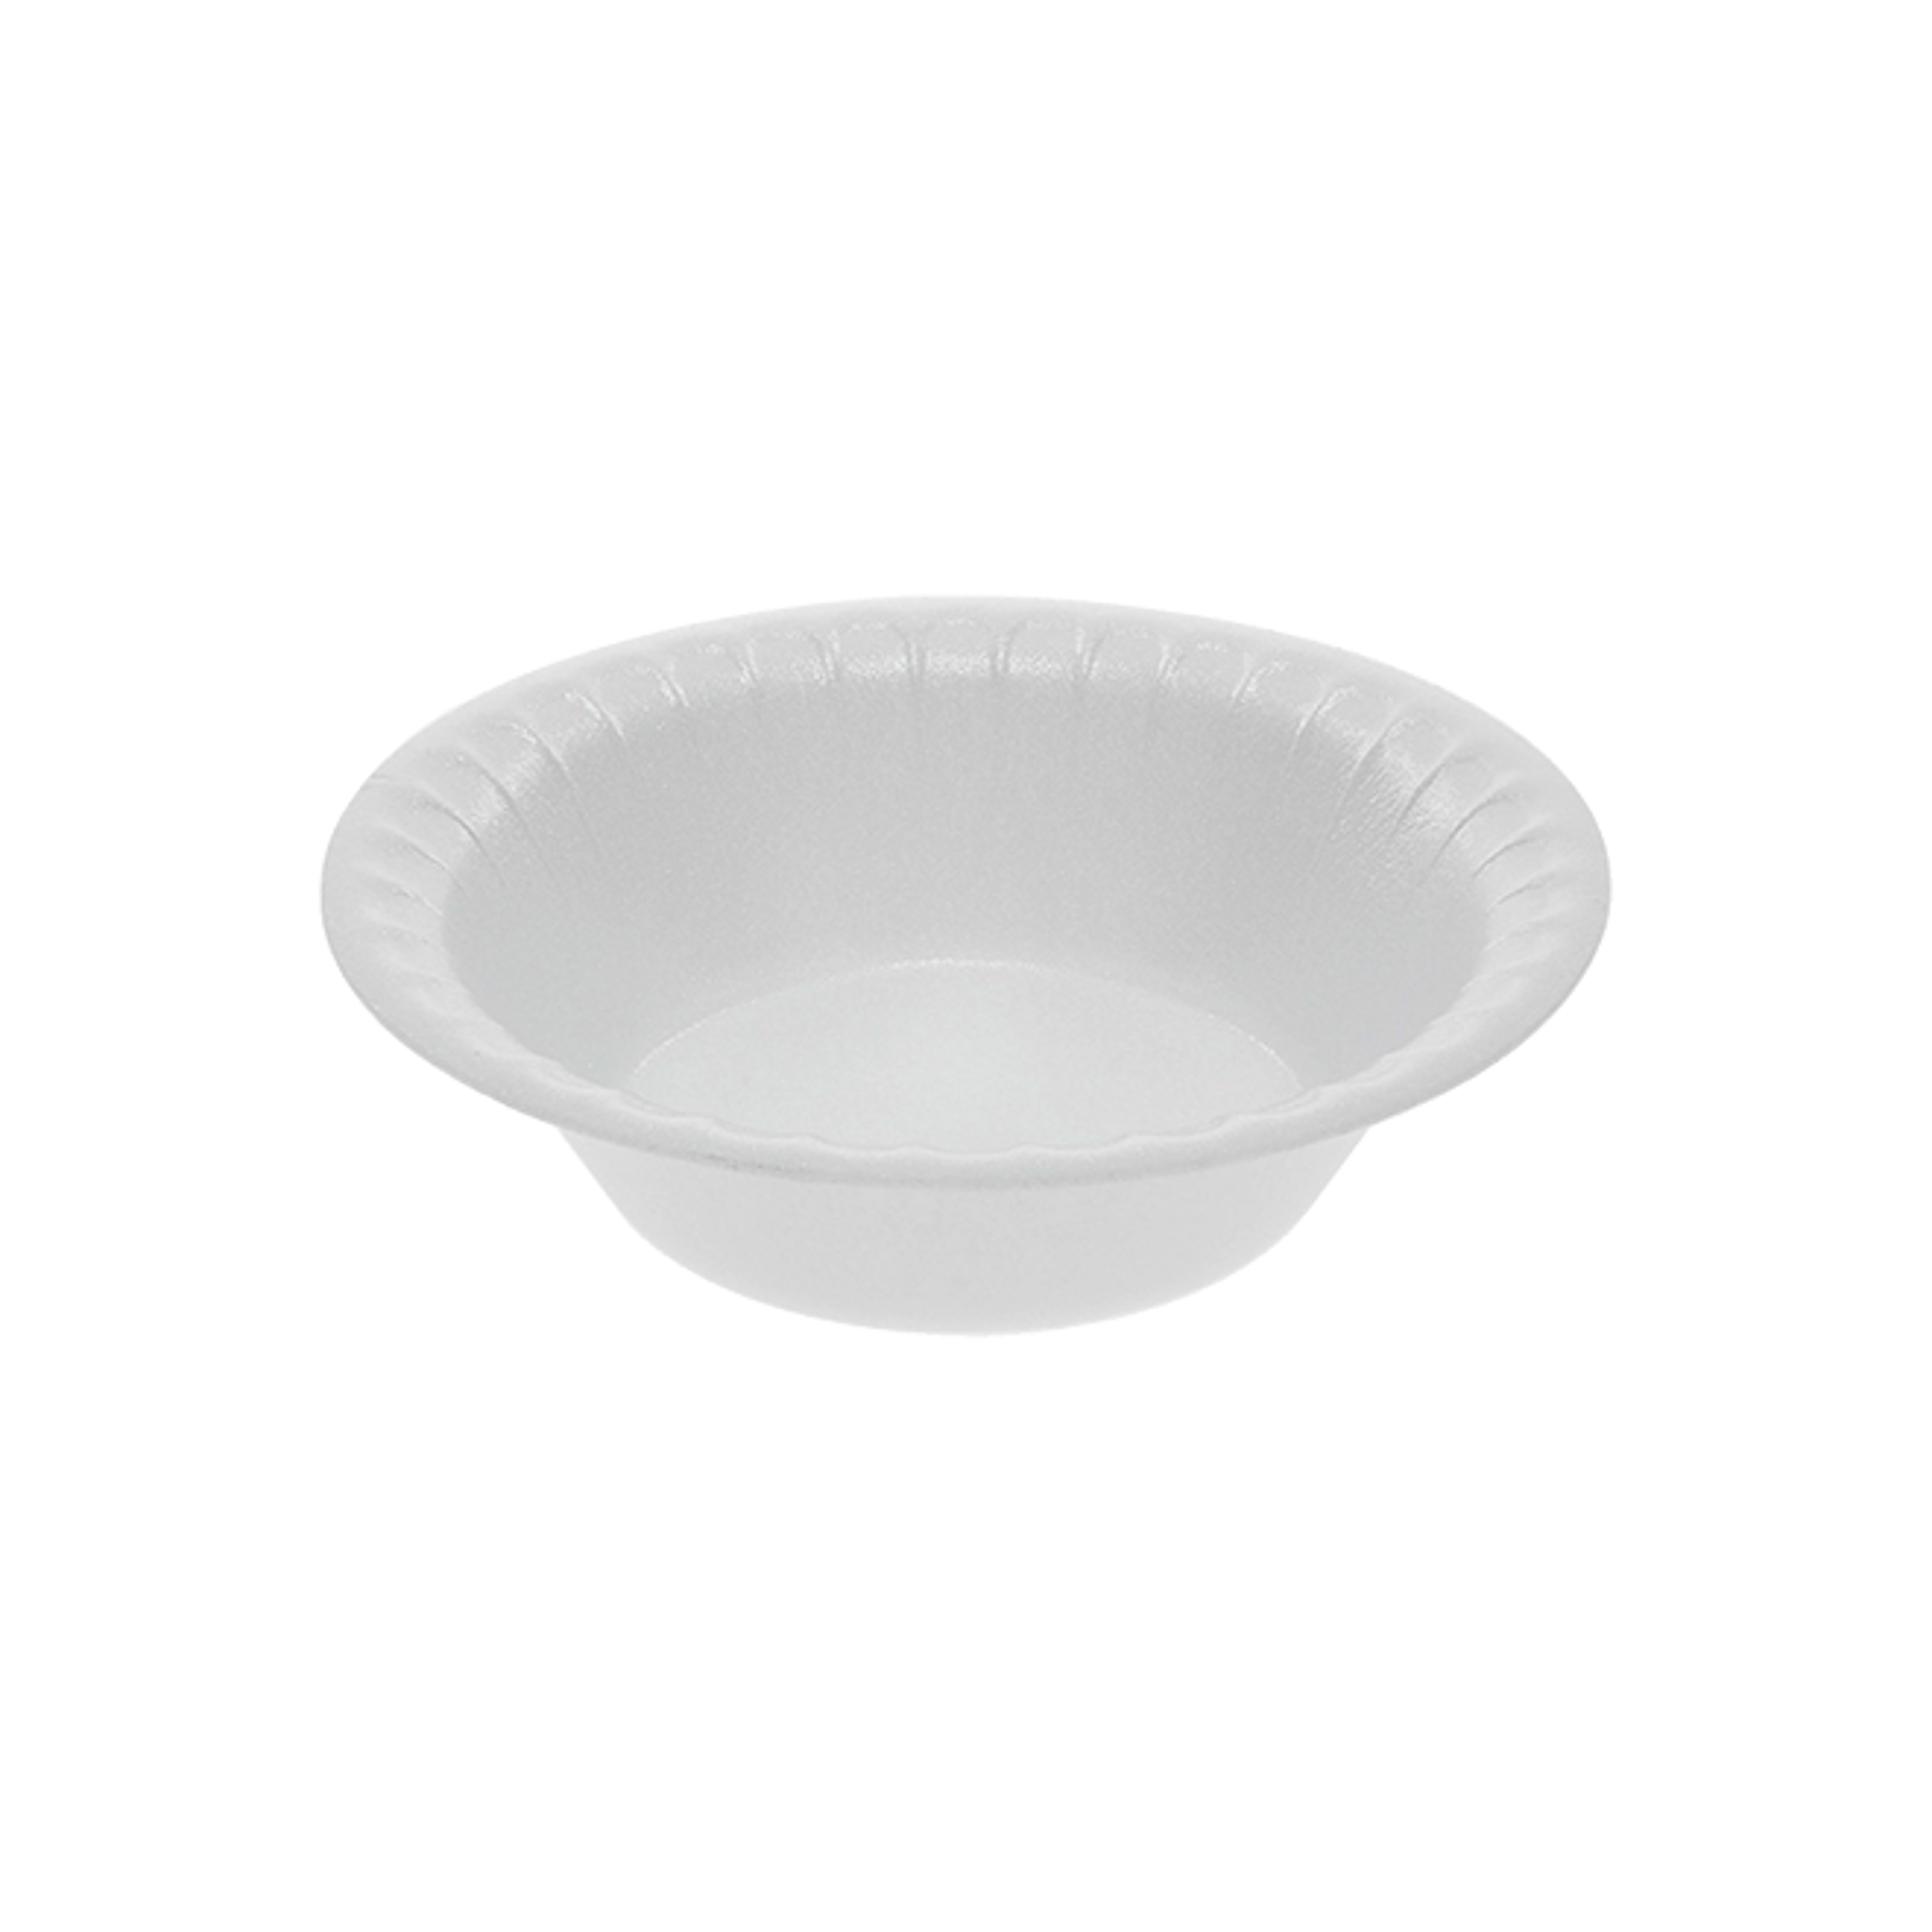 Pactiv Unlaminated Foam Dinnerware Bowl 12 oz 6 inch diameter